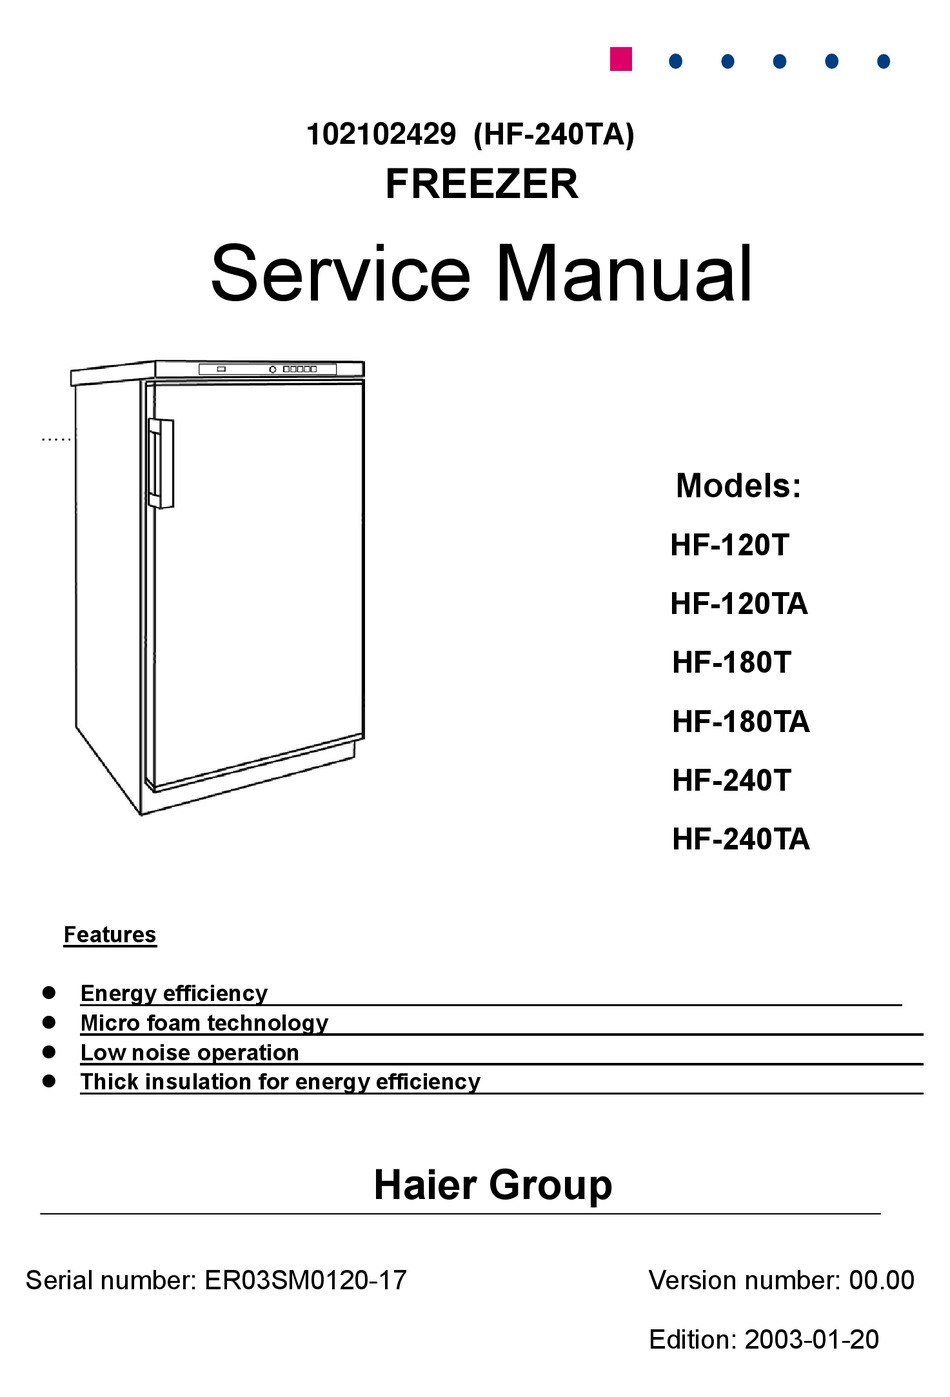 HAIER 102102429 SERVICE MANUAL Pdf Download | ManualsLib